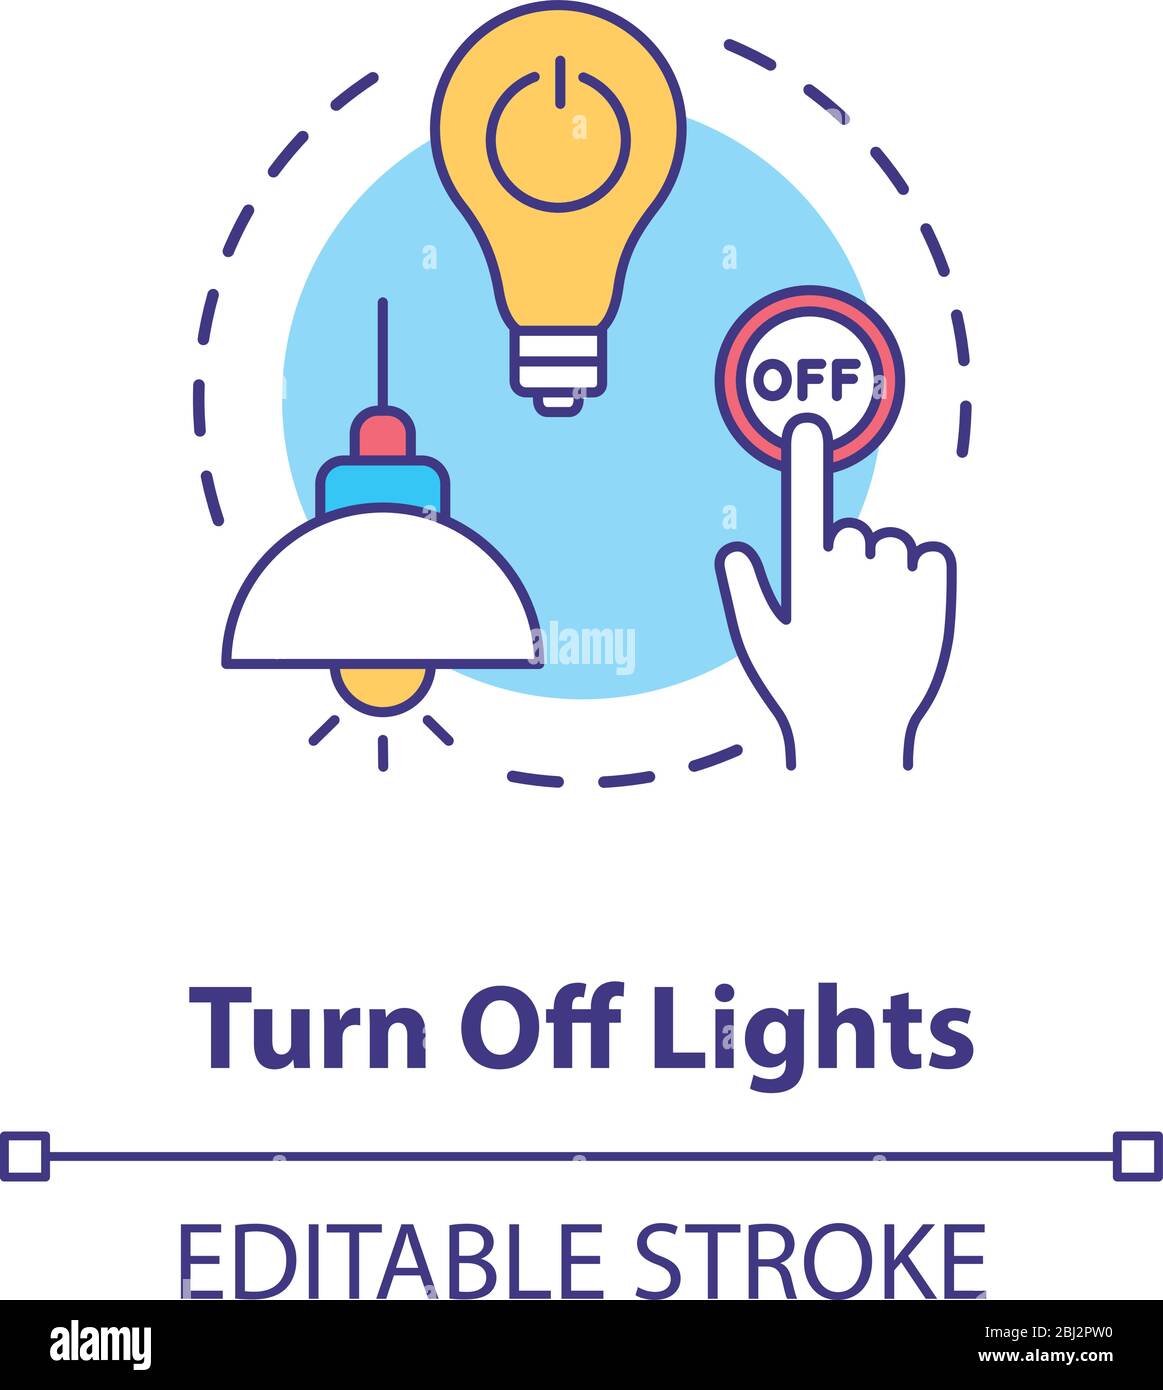 Turn off light concept icon Stock Vector Image & Art - Alamy